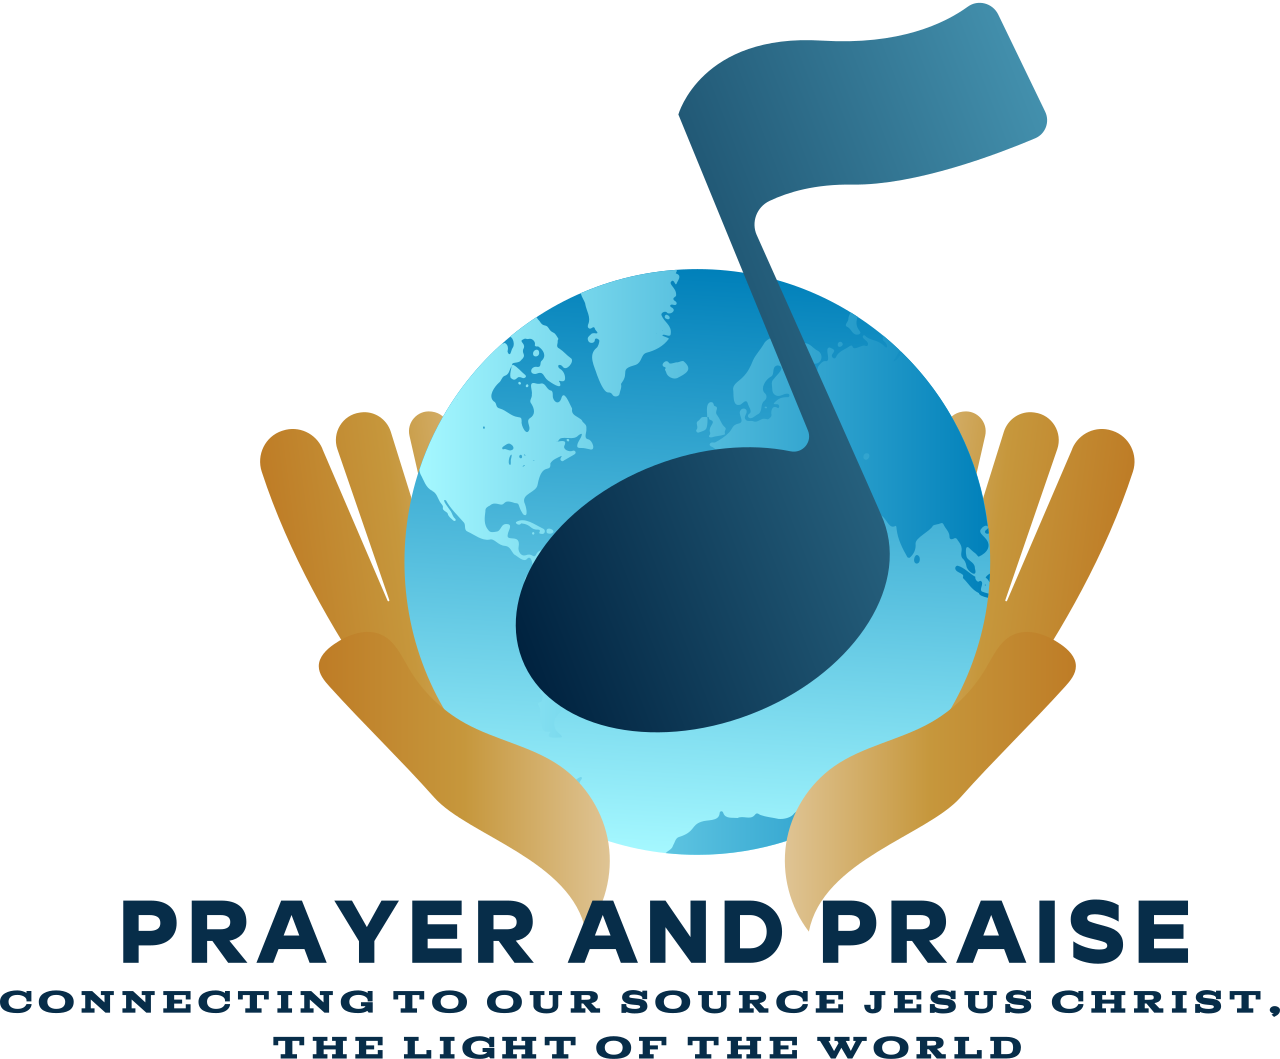 PRAYER AND PRAISE's logo